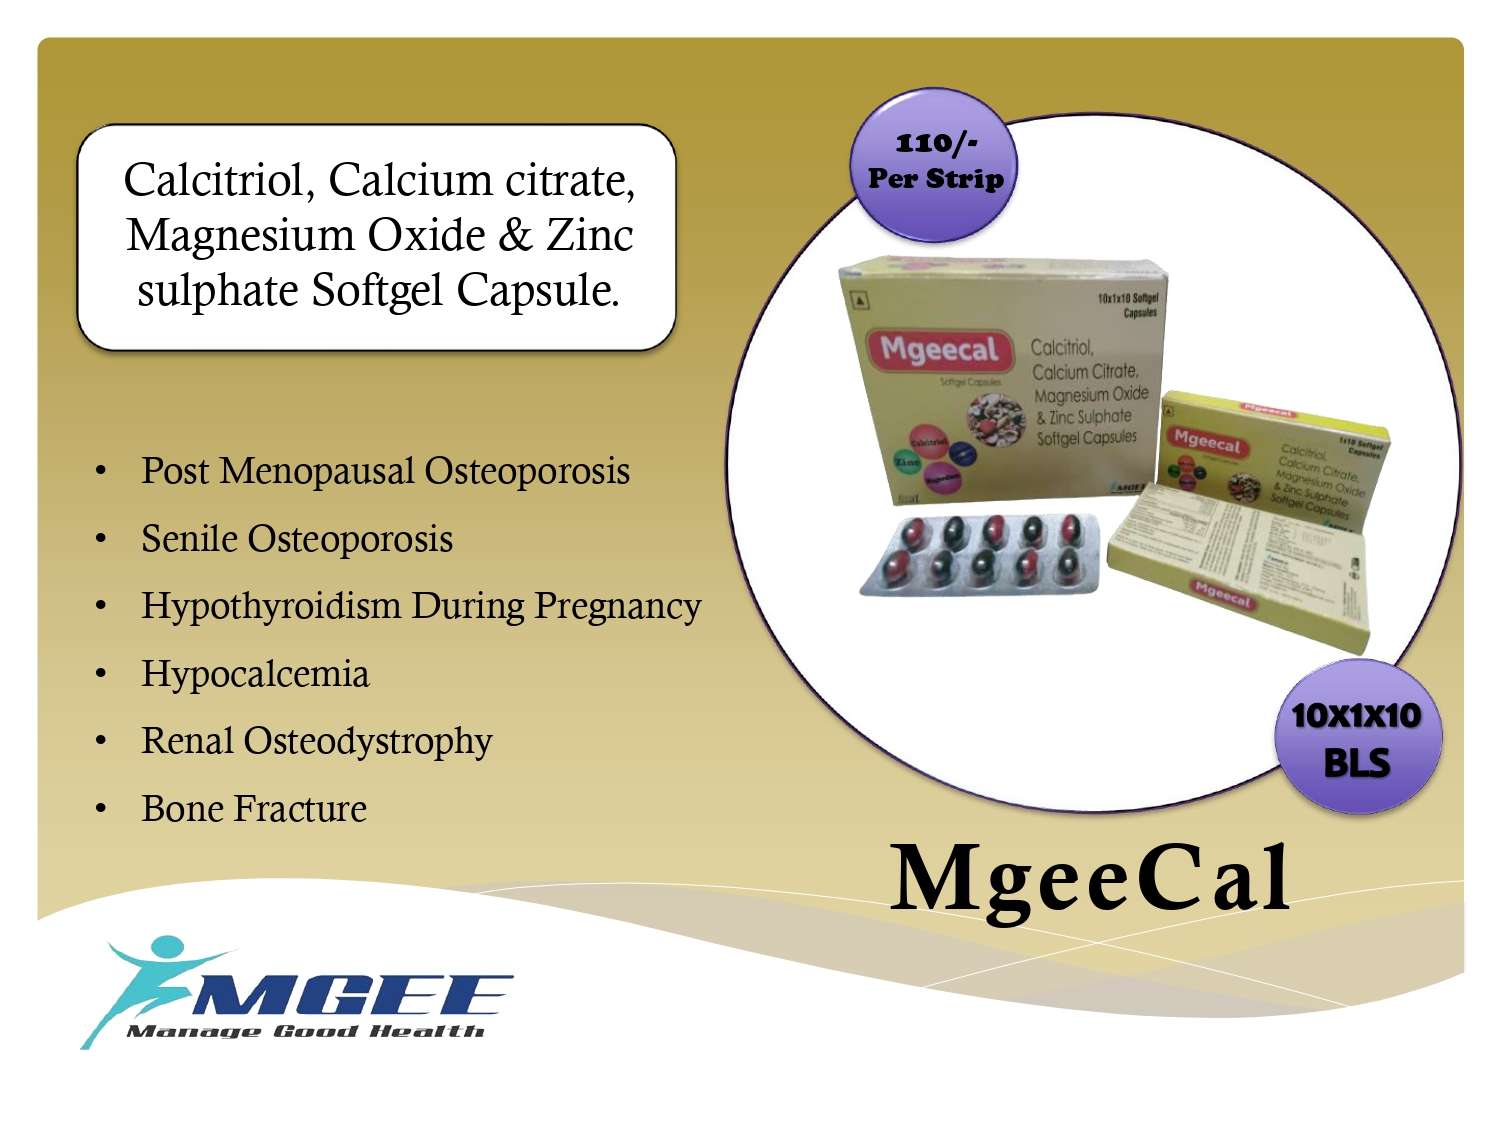 calcitriol 0.25mcg + calcium citrate 500mg
+elemental of magnesium excipients 50 mg ,elemental zinc magnesium oxide 7.5 mg